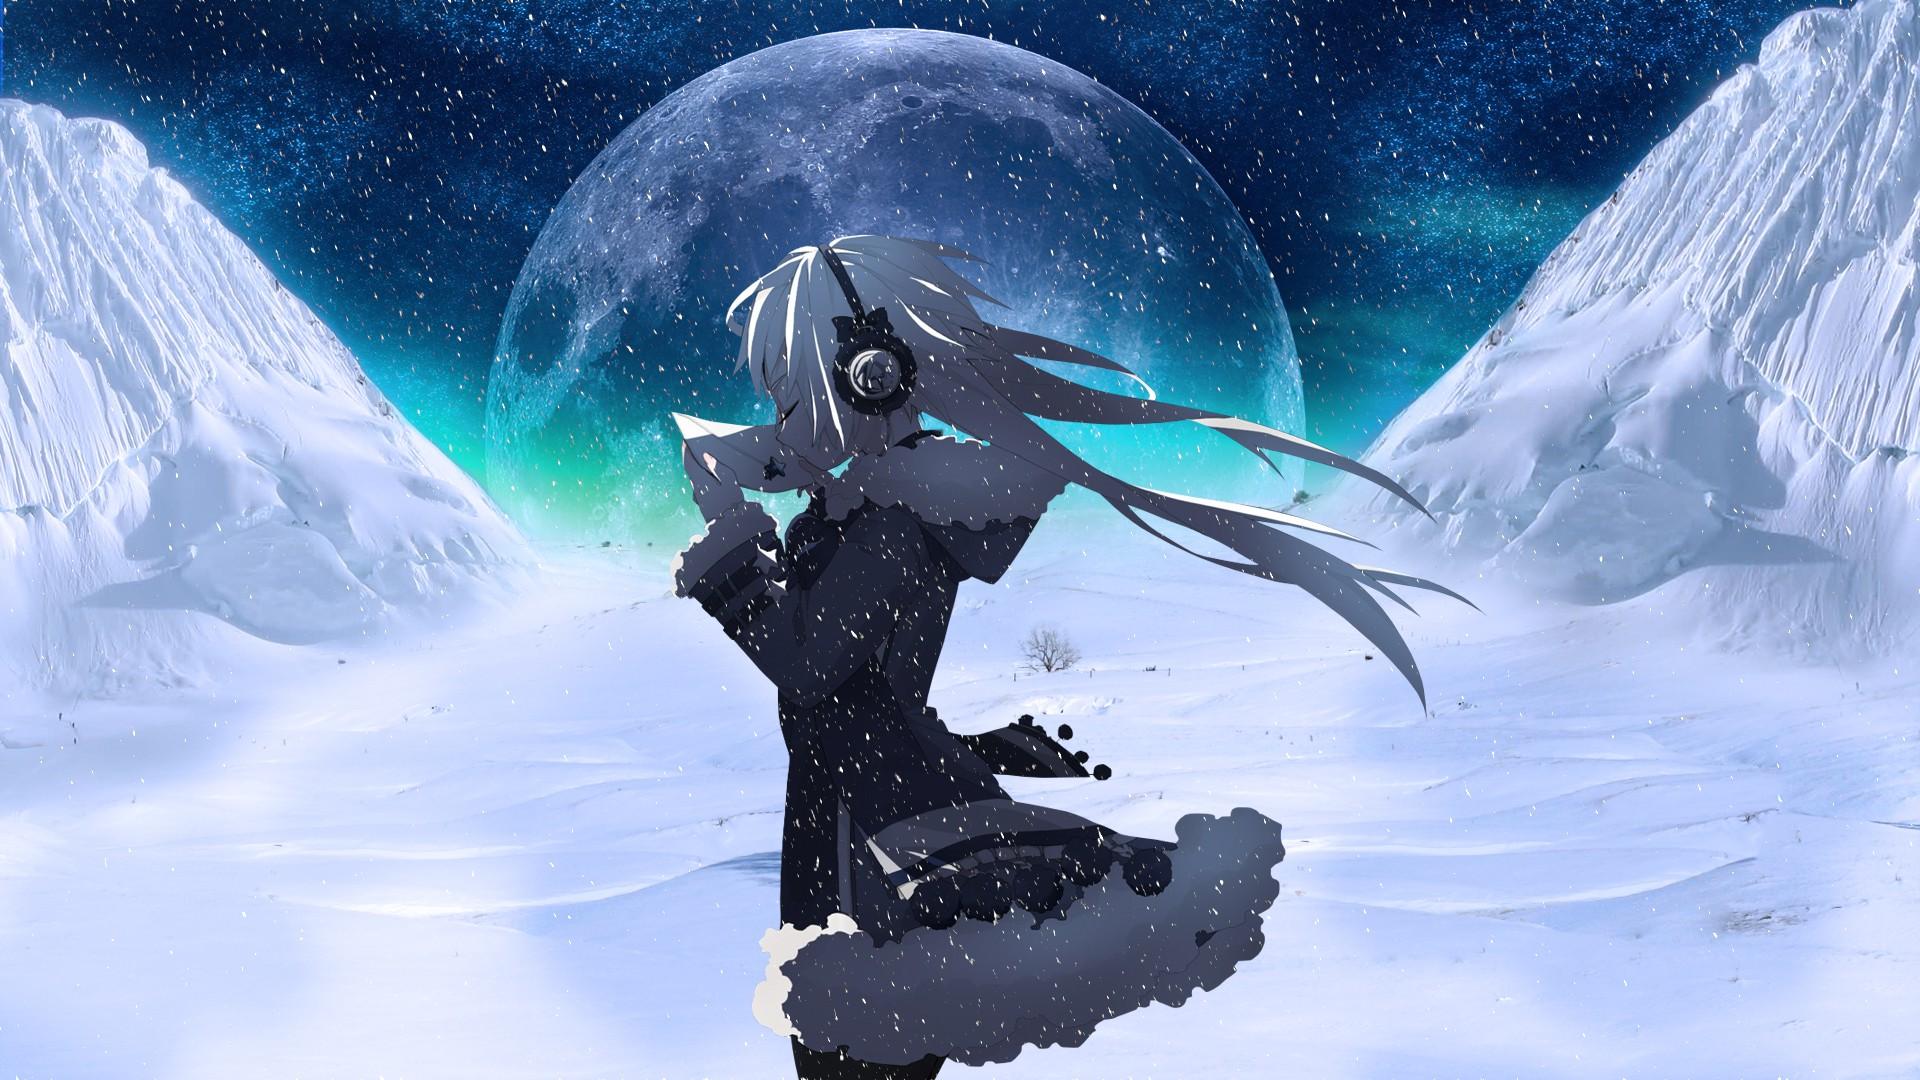 Snown Anime girl wallpaper HD by Ponydesign0 on DeviantArt